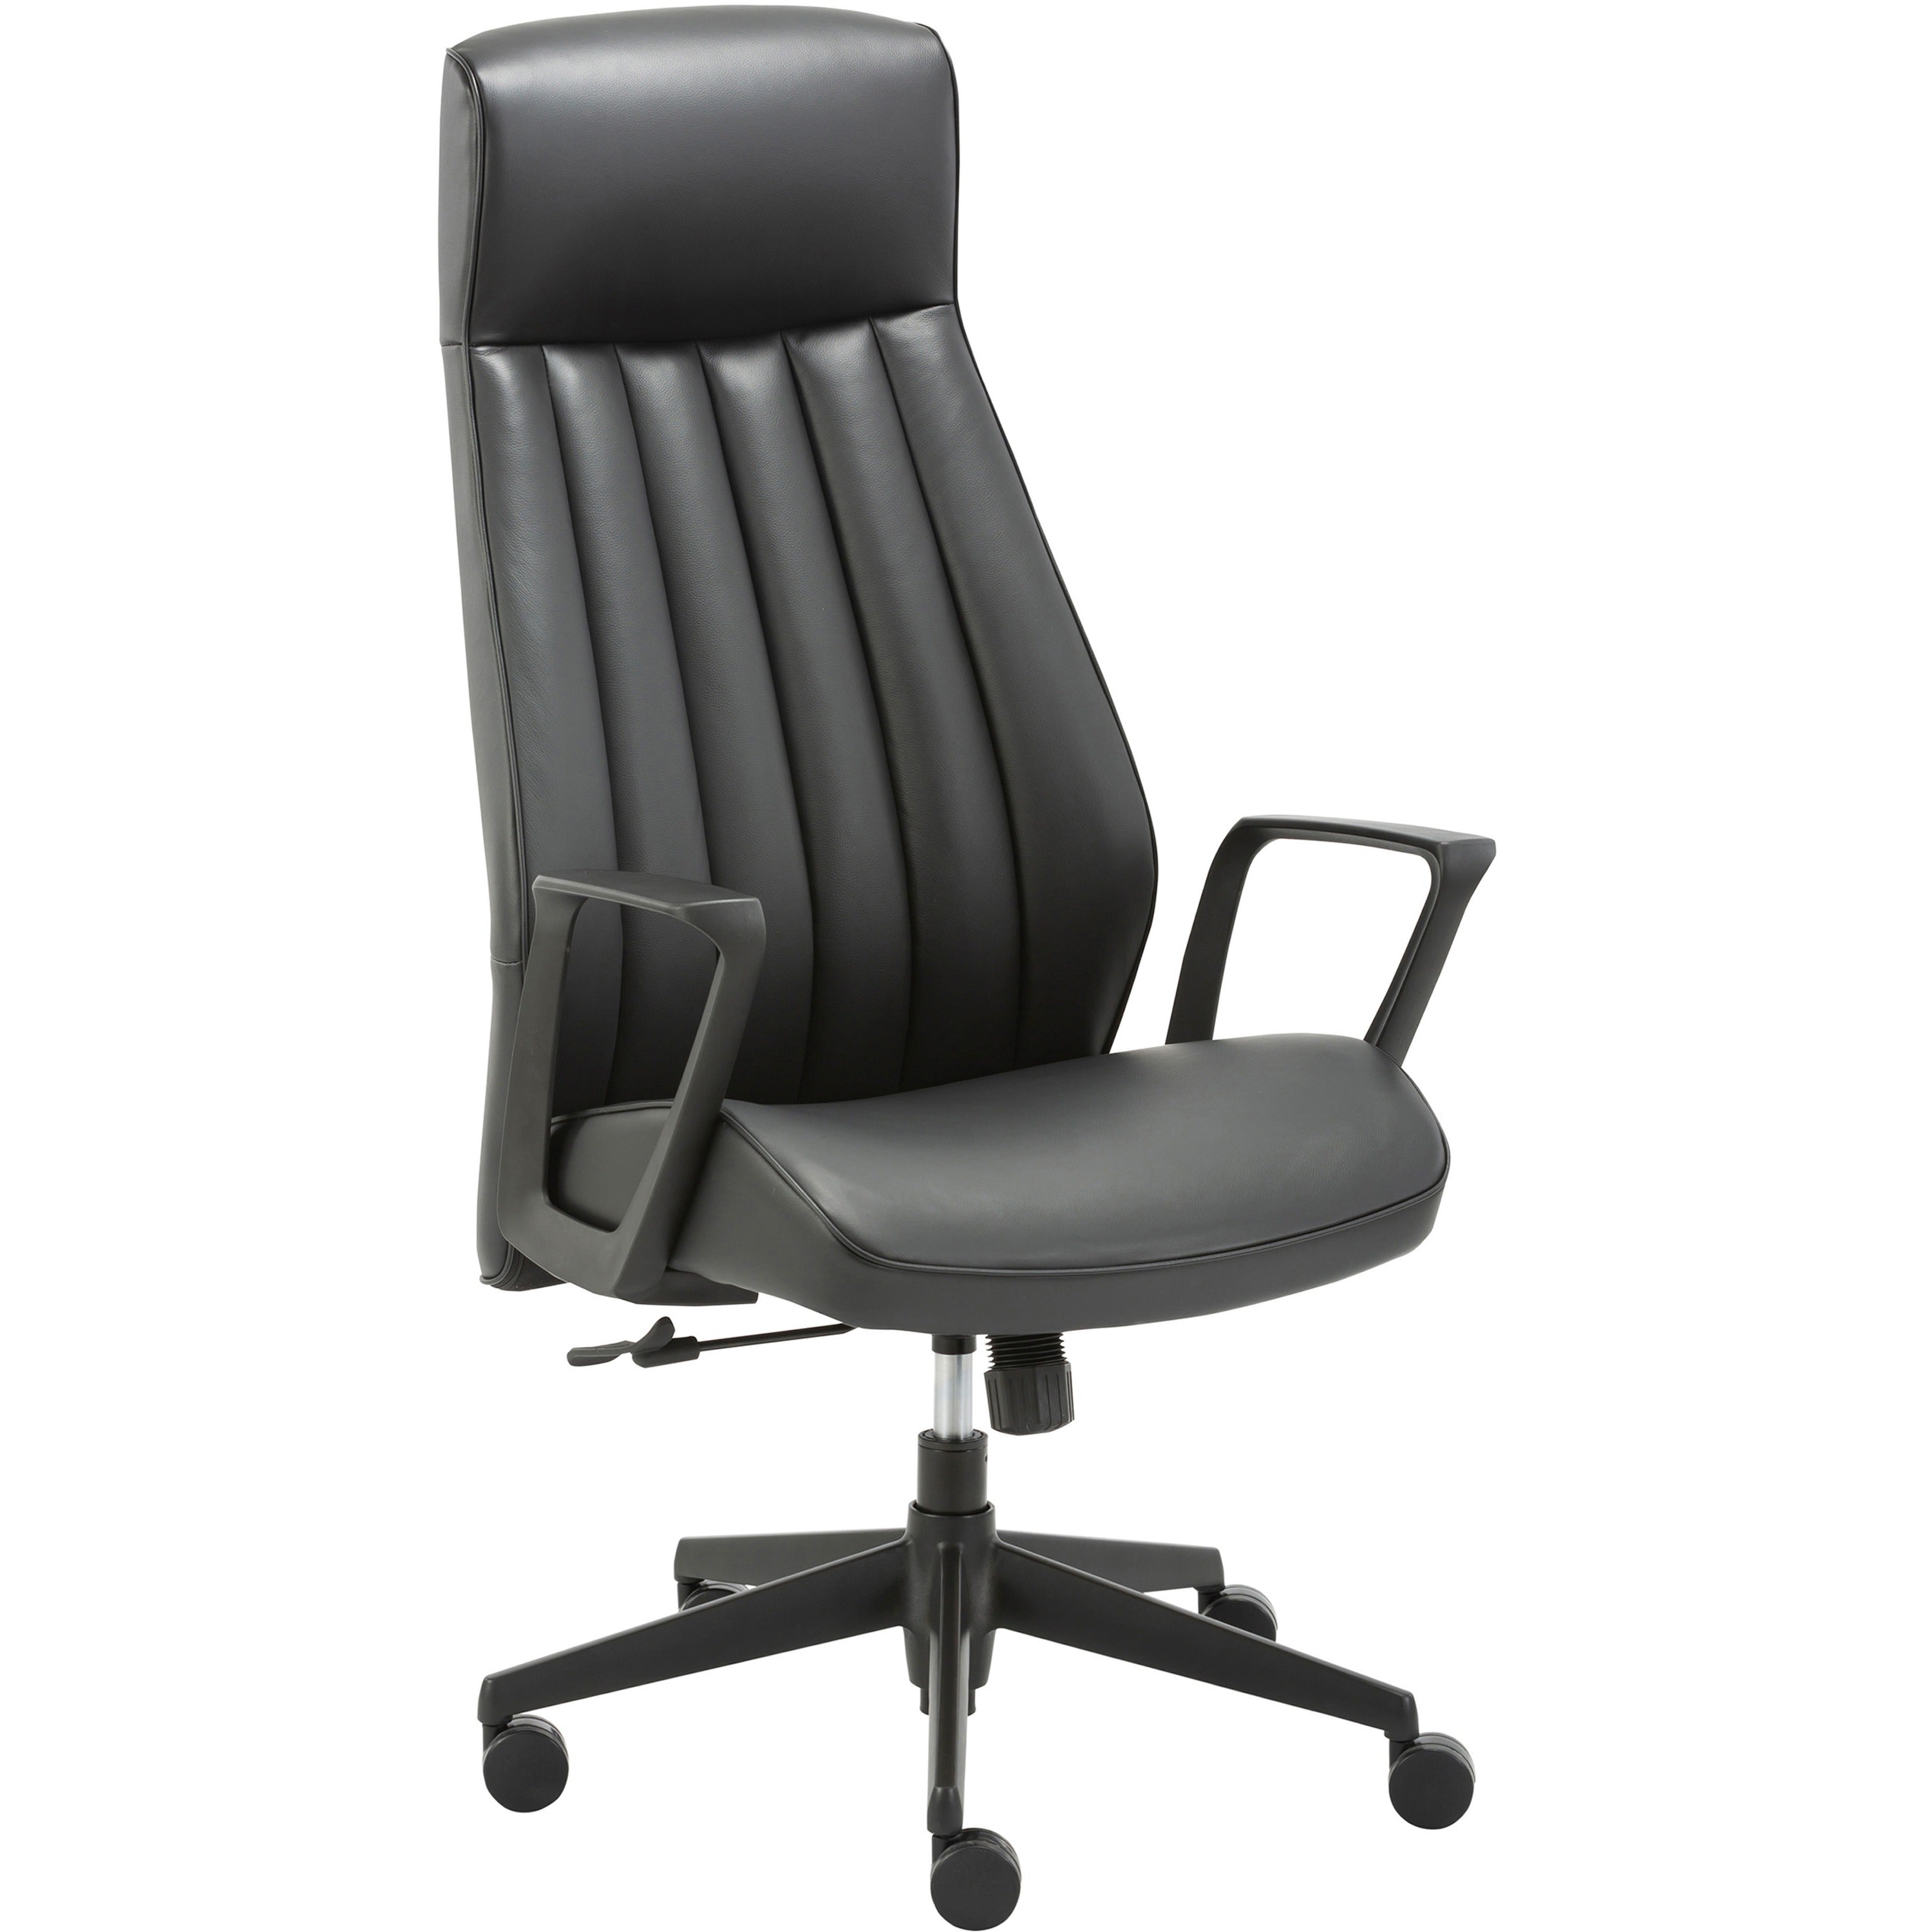 lys-high-back-bonded-leather-chair-black-bonded-leather-seat-black-bonded-leather-back-high-back-armrest-1-each_lysch100labk - 1